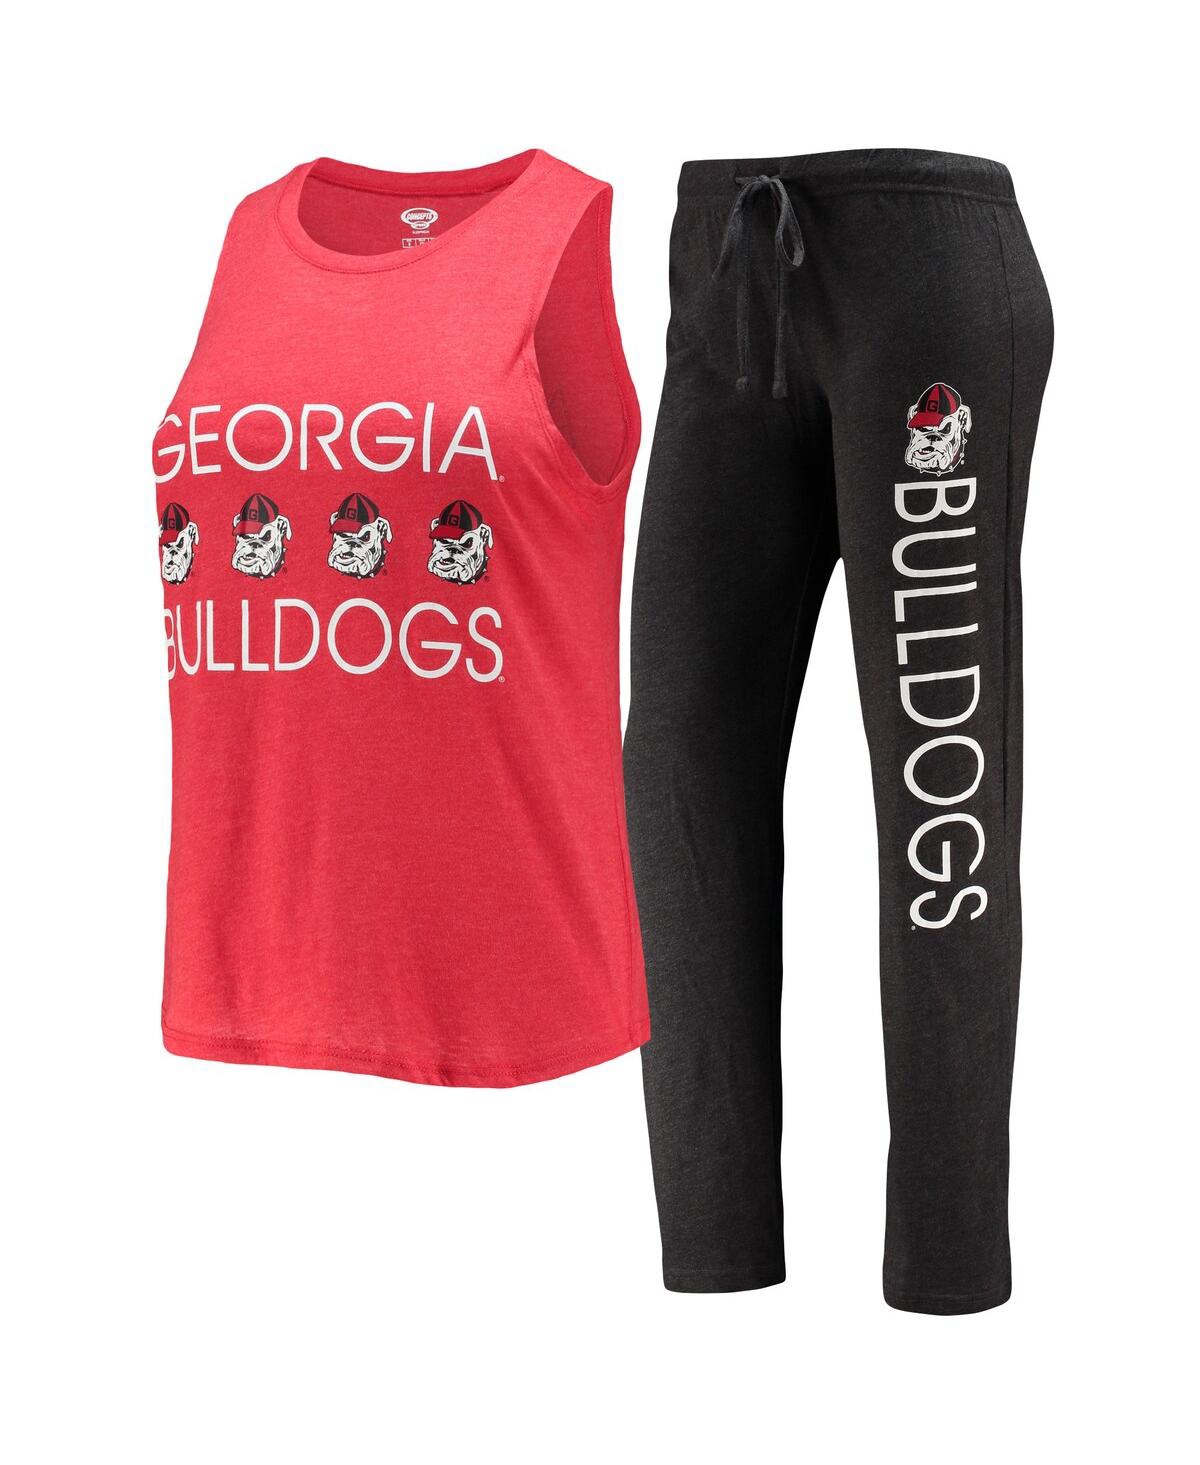 Women's Black, Red Georgia Bulldogs Tank Top and Pants Sleep Set - Black, Red